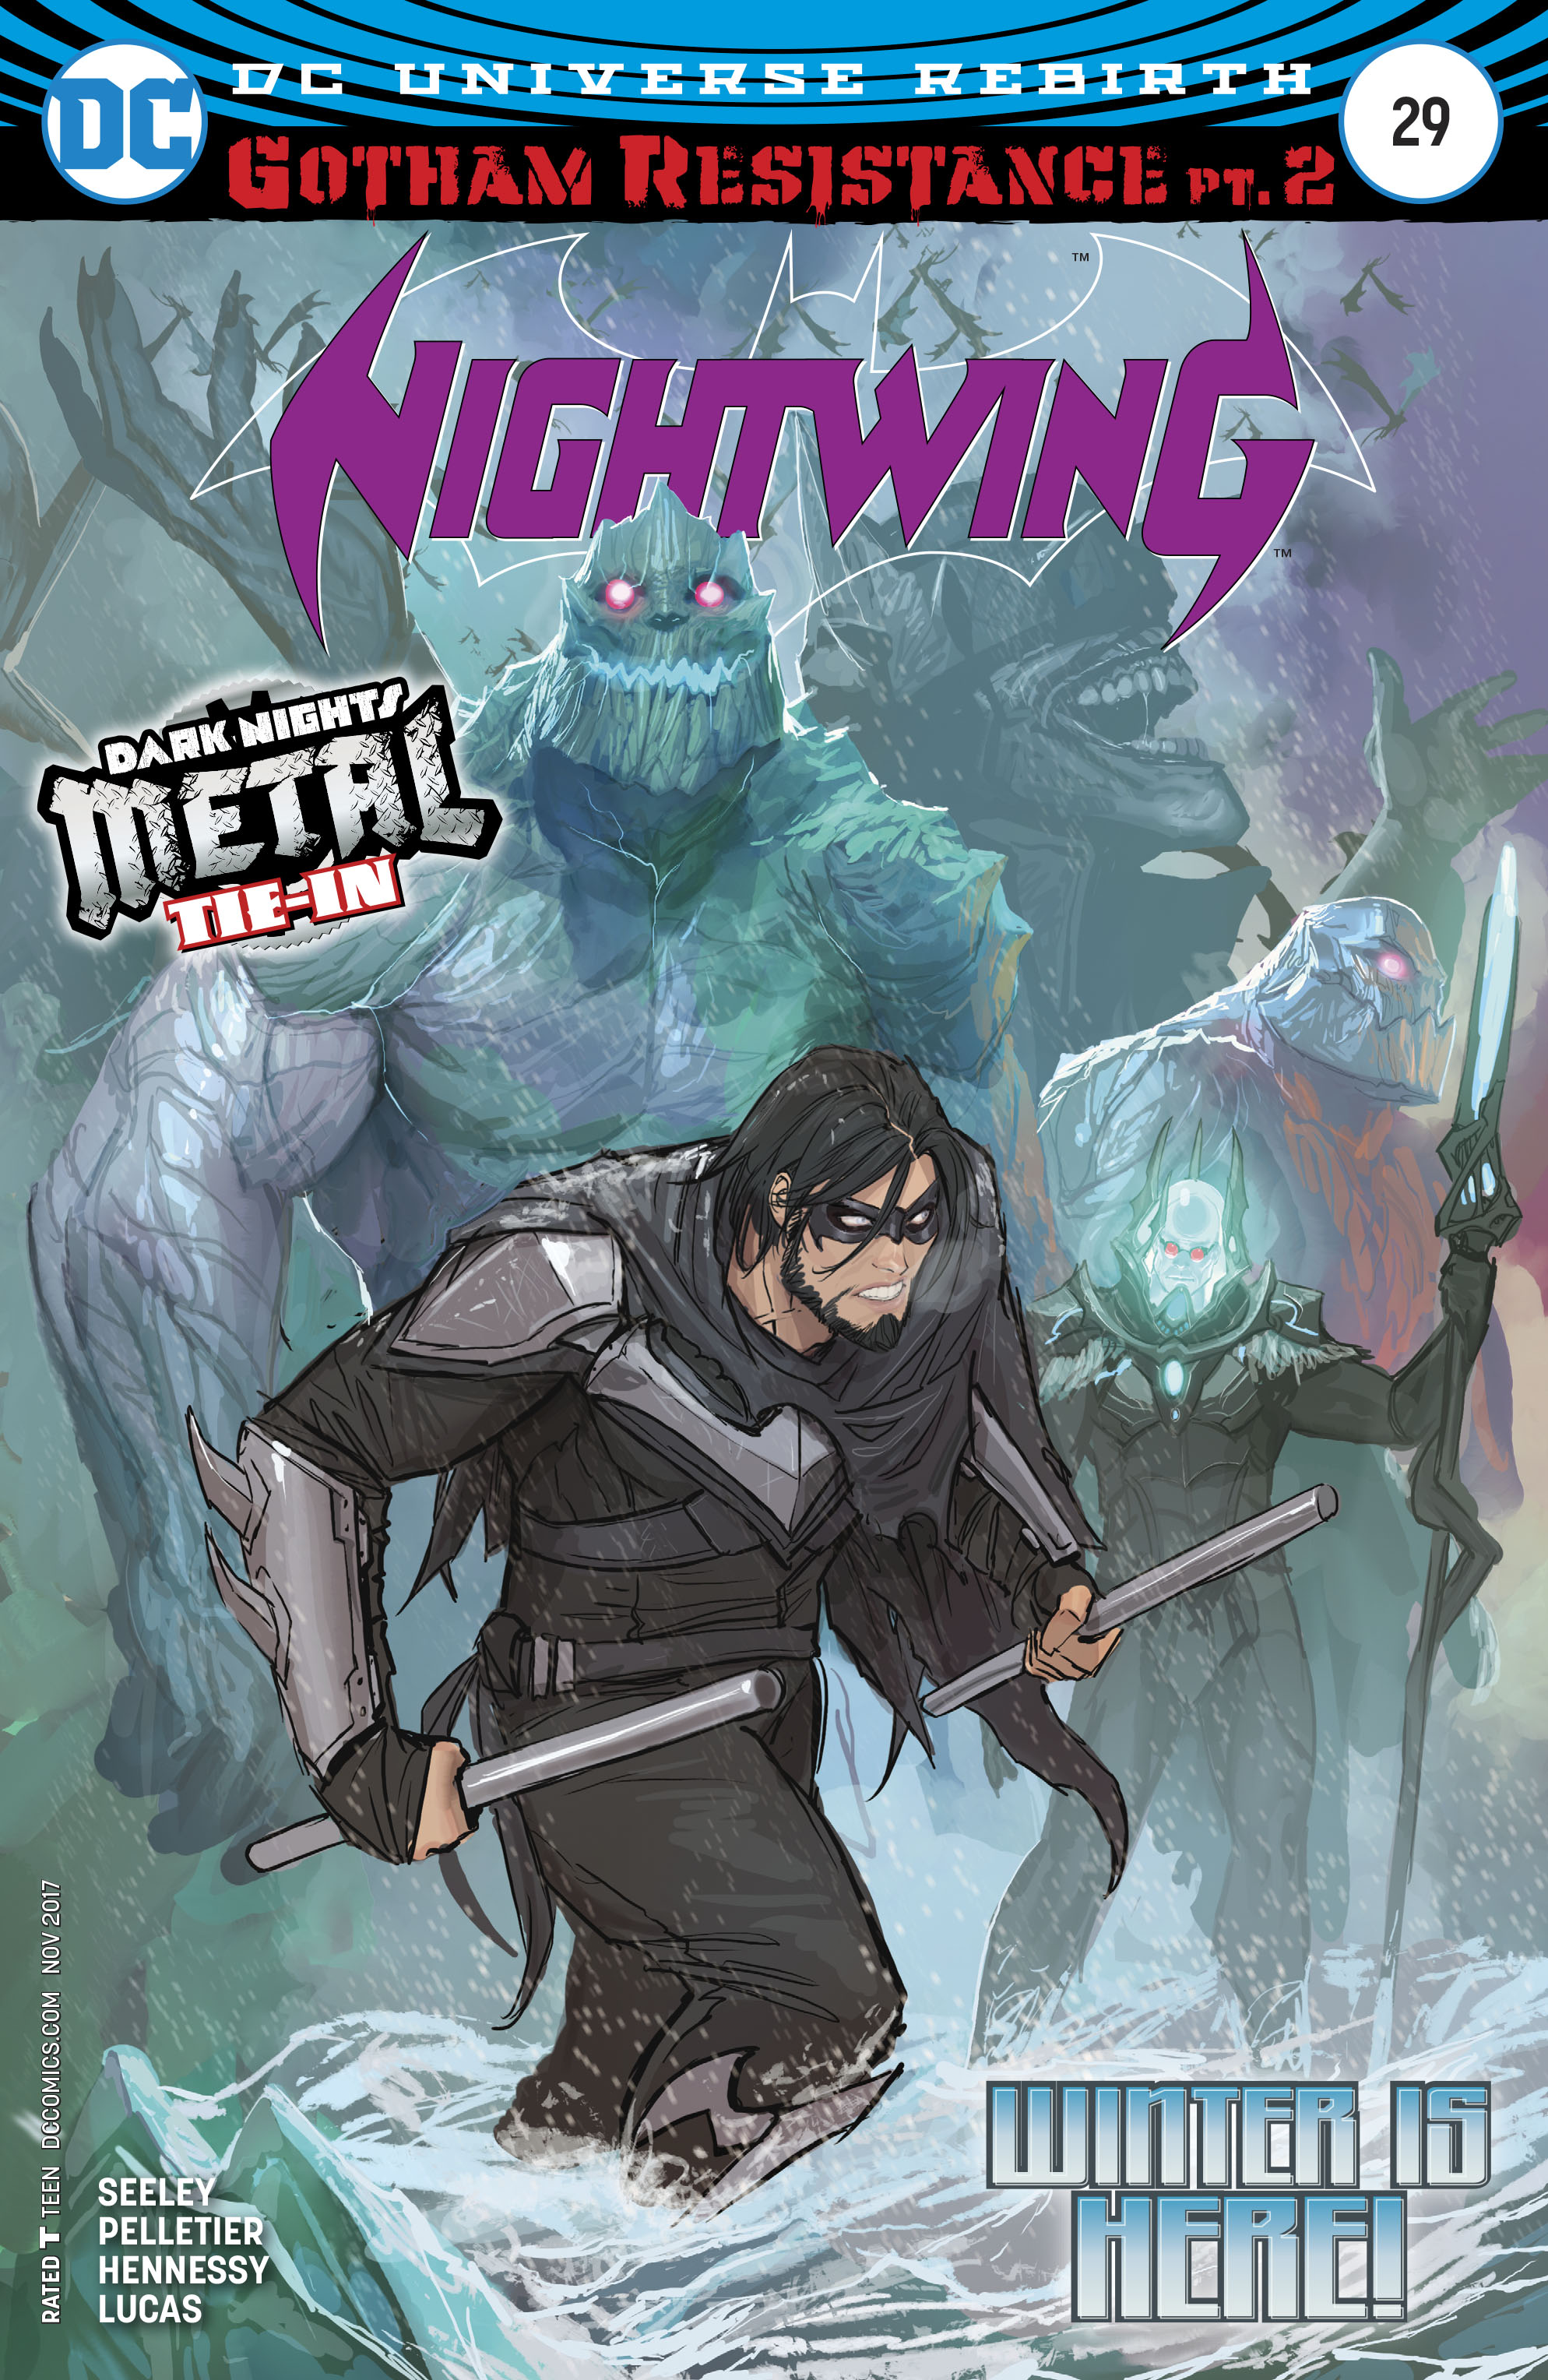 Nightwing #29 review | Batman News